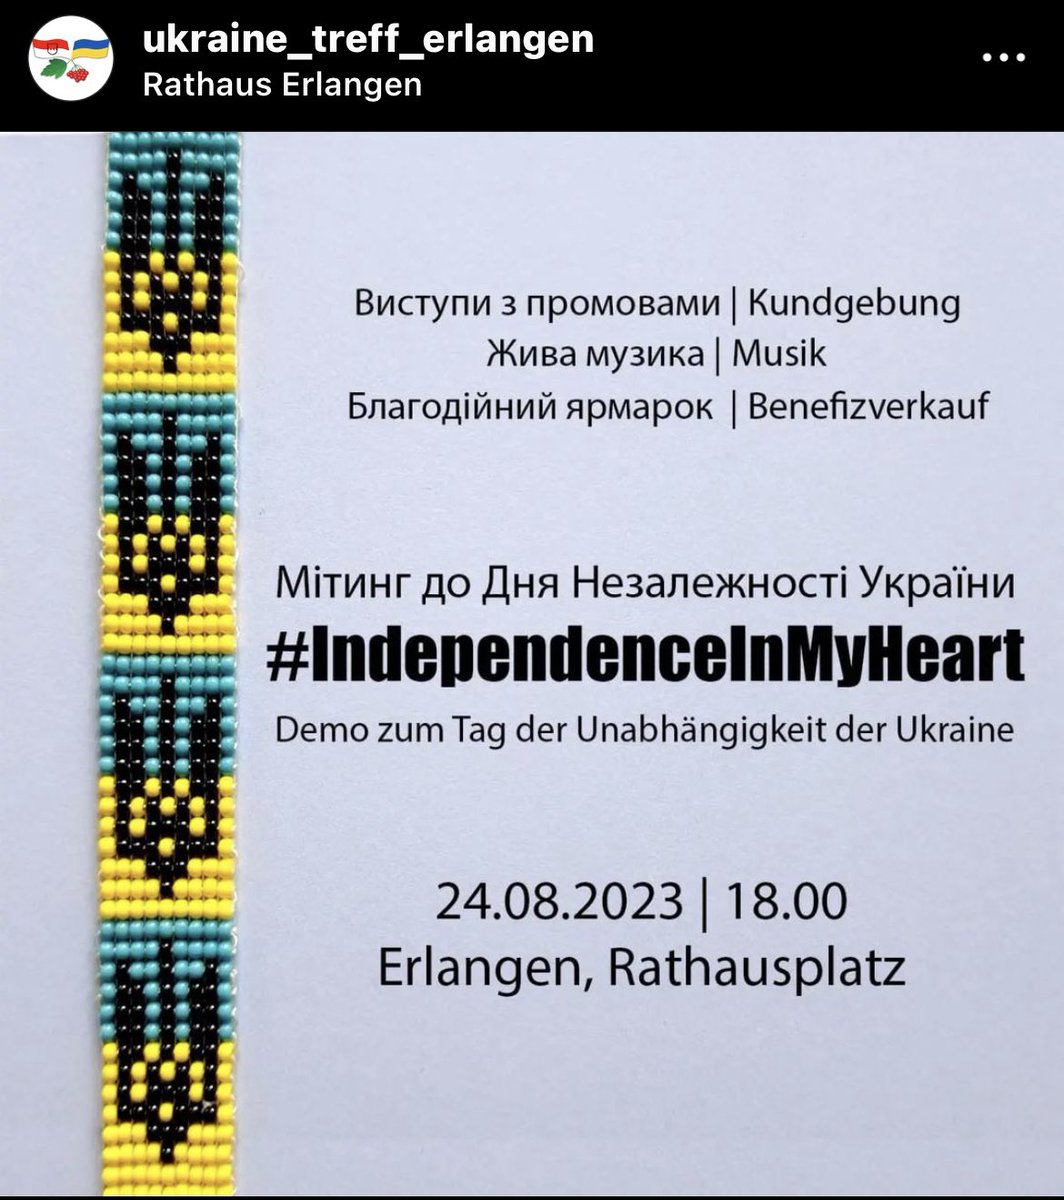 ERLANGEN 24.8.23

Kundgebung um 18 Uhr am Rathausplatz 

instagram.com/p/CvuCuaMoNhd/…

#IndependenceInMyHeart #StandWithUkraine #ProUkraineDemo #stopgenocideukraine